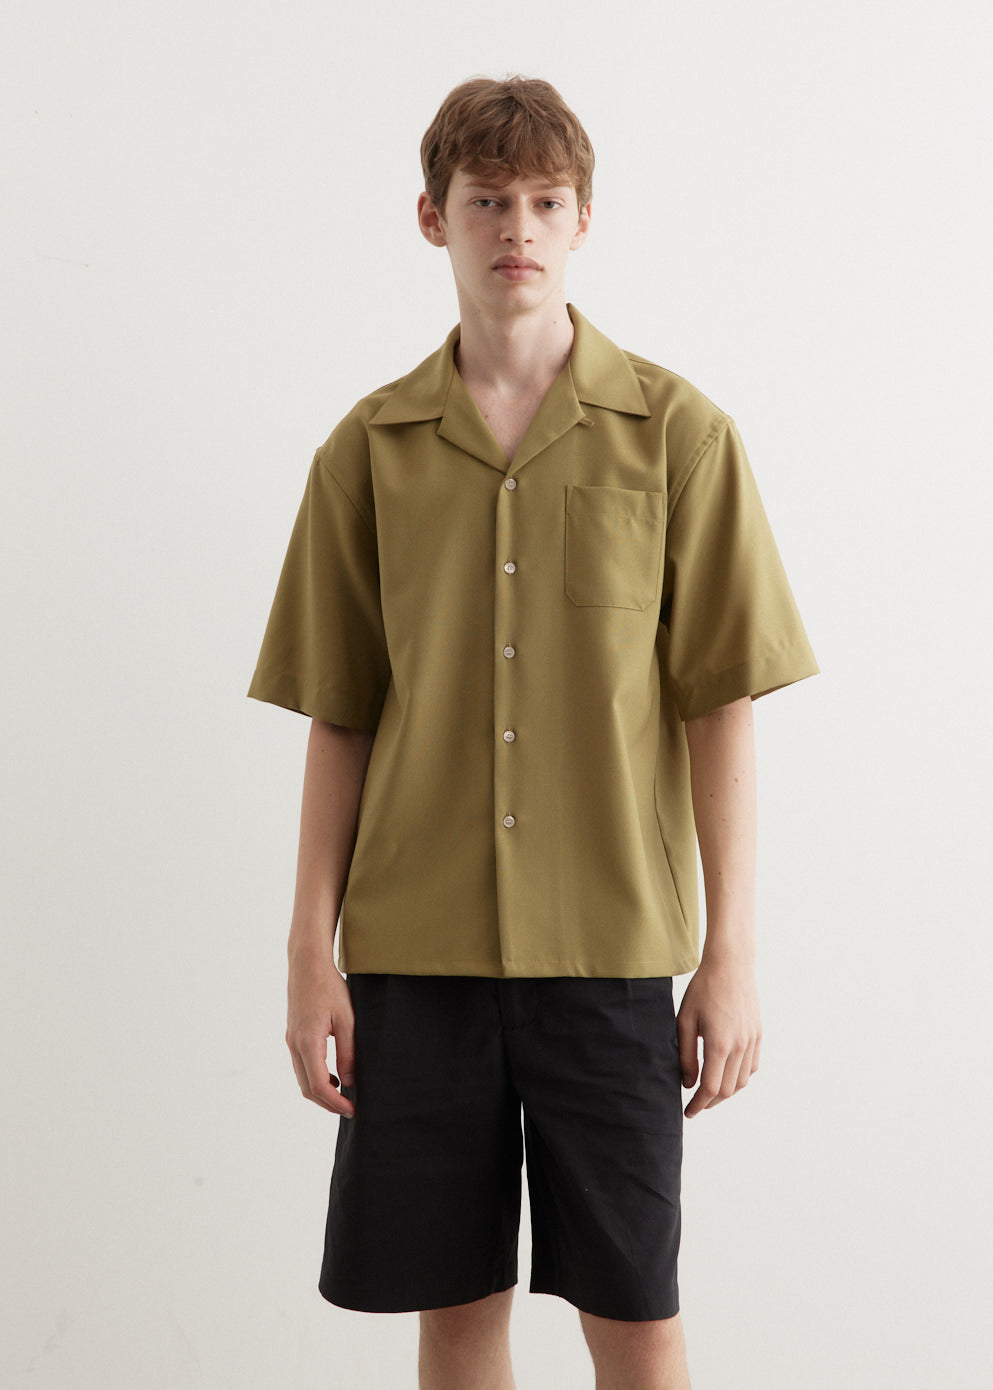 Tropical Wool Short-Sleeved Shirt